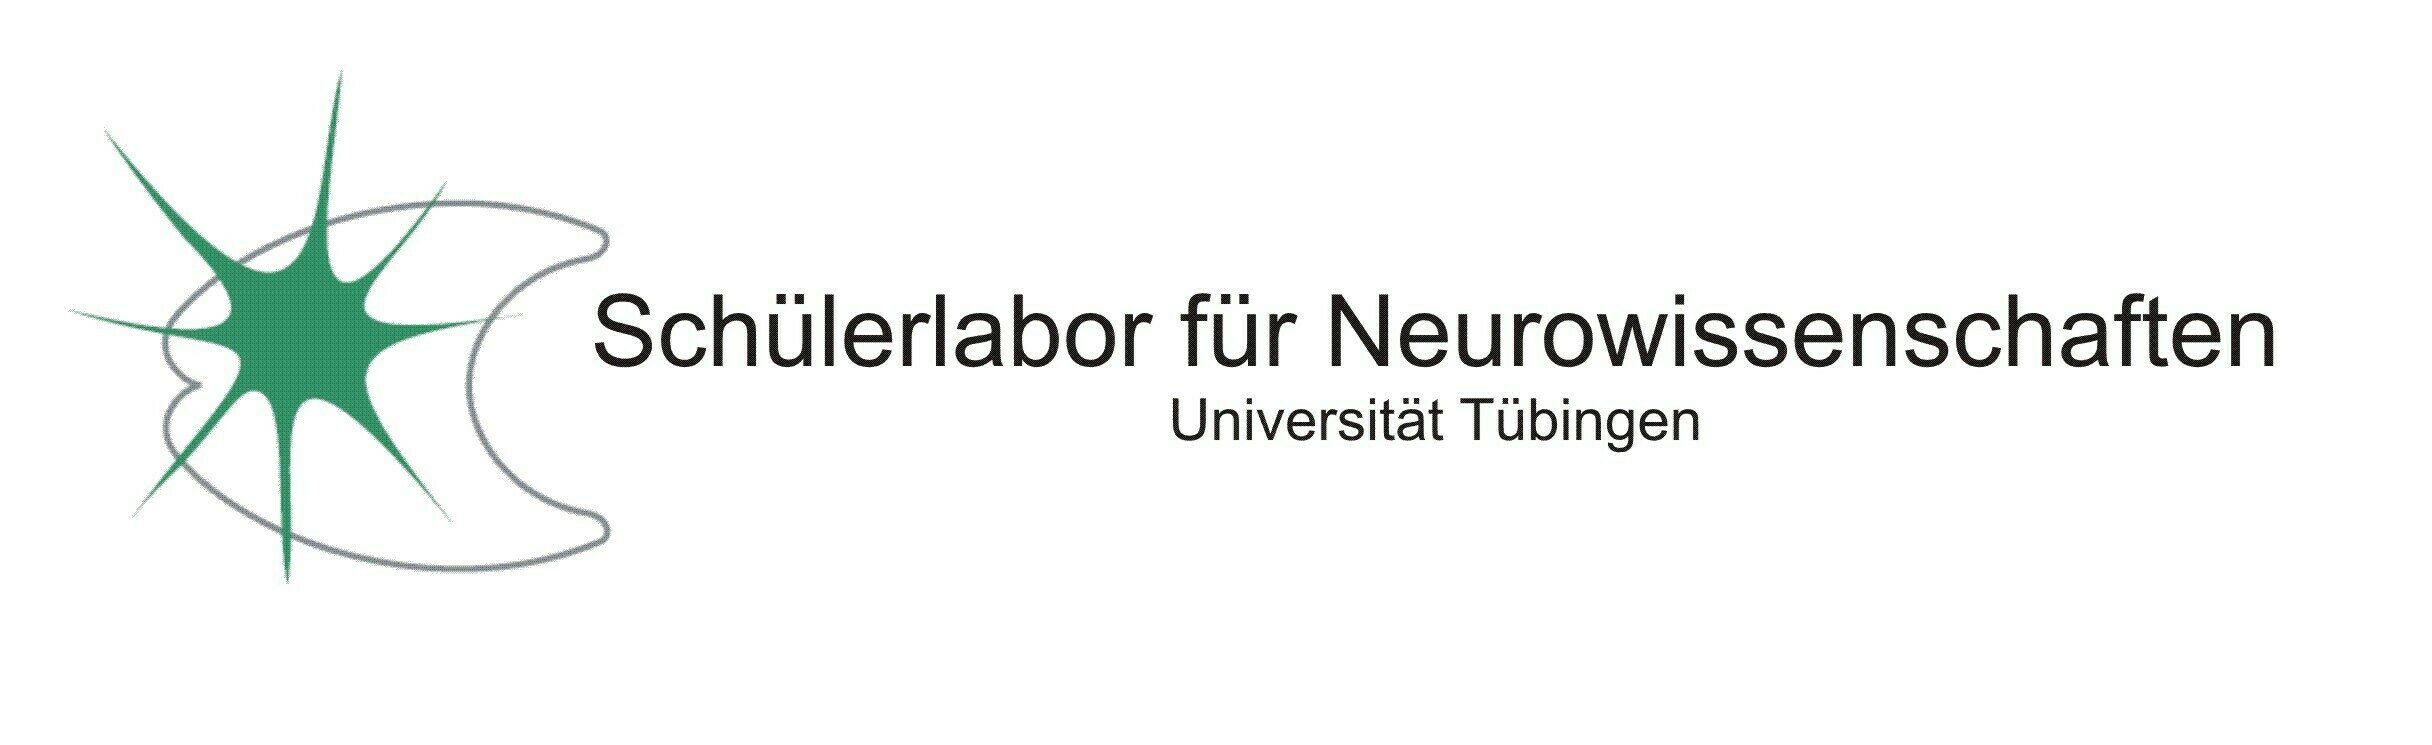 Logo des Schülerlabors Neurowissenschaften der Universität Tübingen